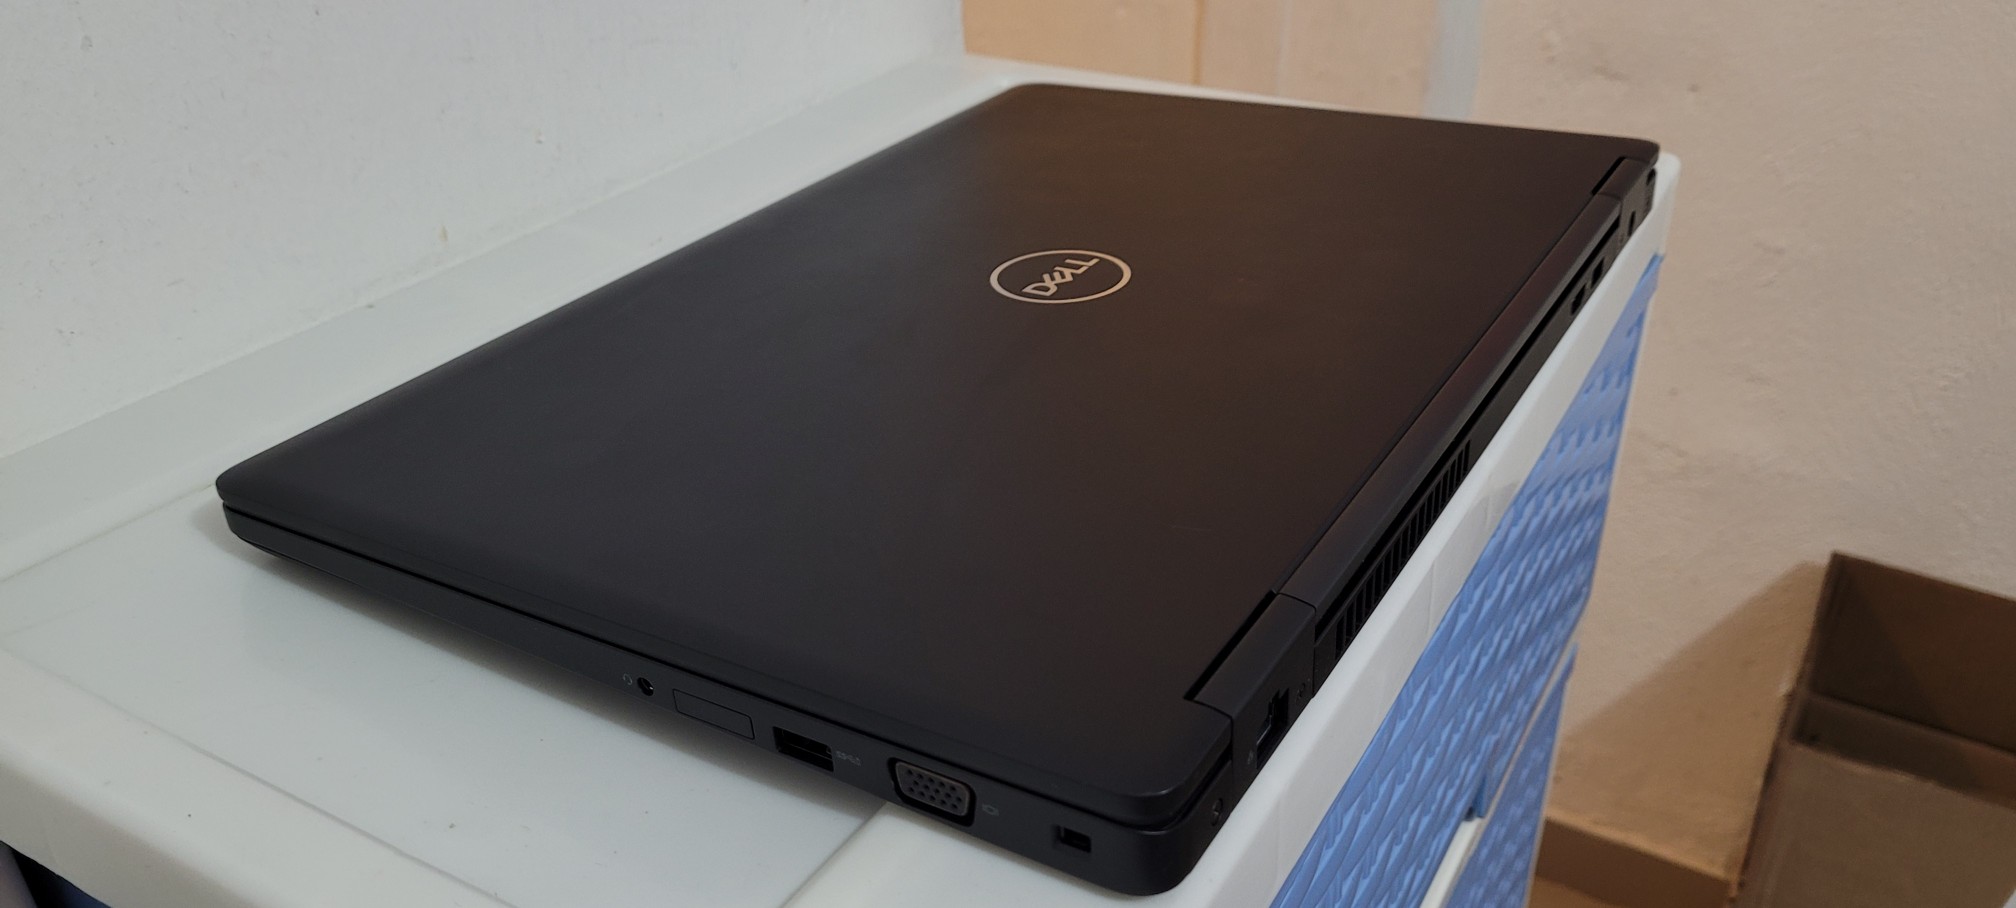 computadoras y laptops - Dell 5580 17 Pulg Core i5 7ma Gen Ram 8gb ddr4 Disco 1000gb hdmi 2